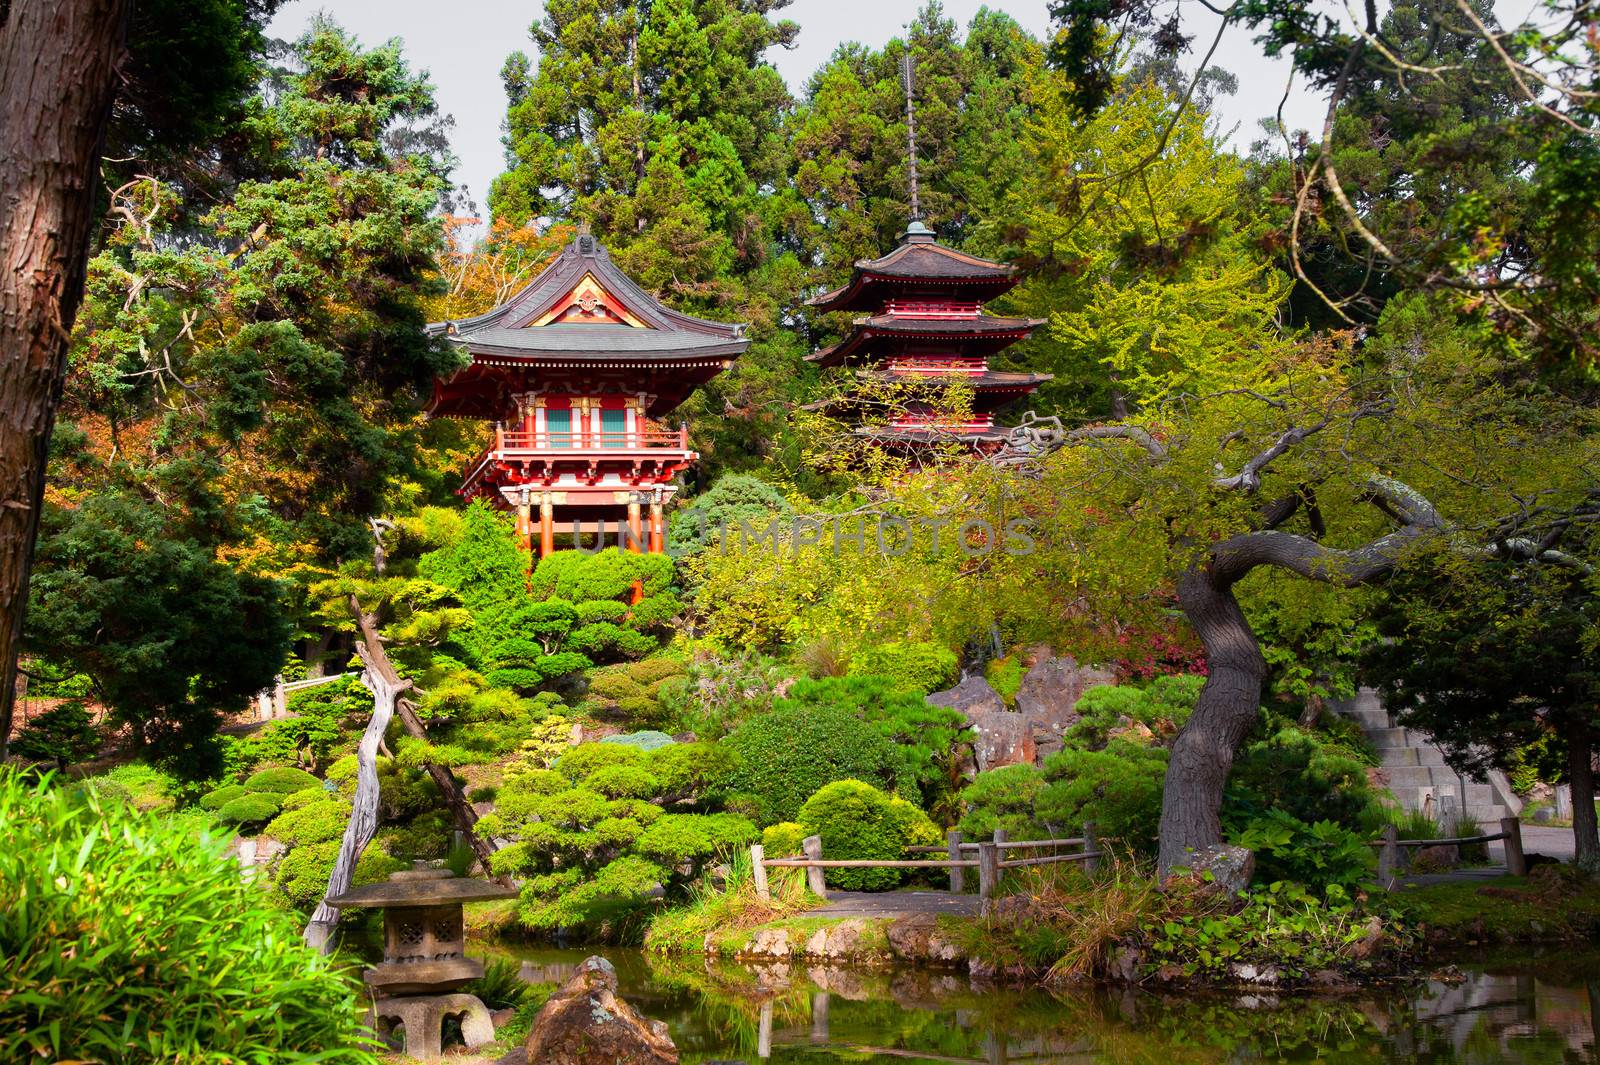 Japanese Tea Garden by CelsoDiniz